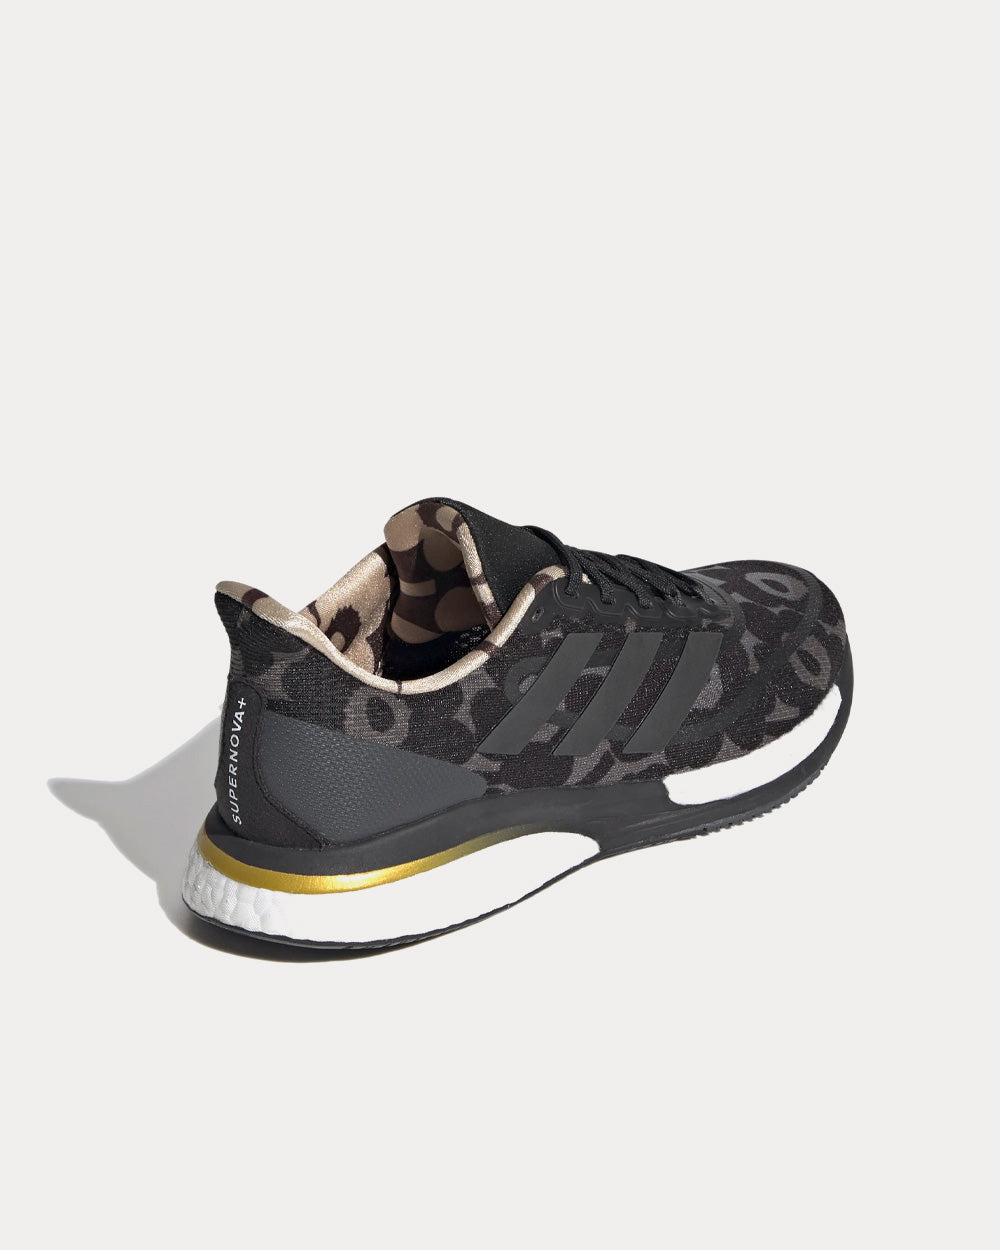 Adidas x Marimekko - Supernova Grey Six / Core Black / Gold Metallic Running Shoes